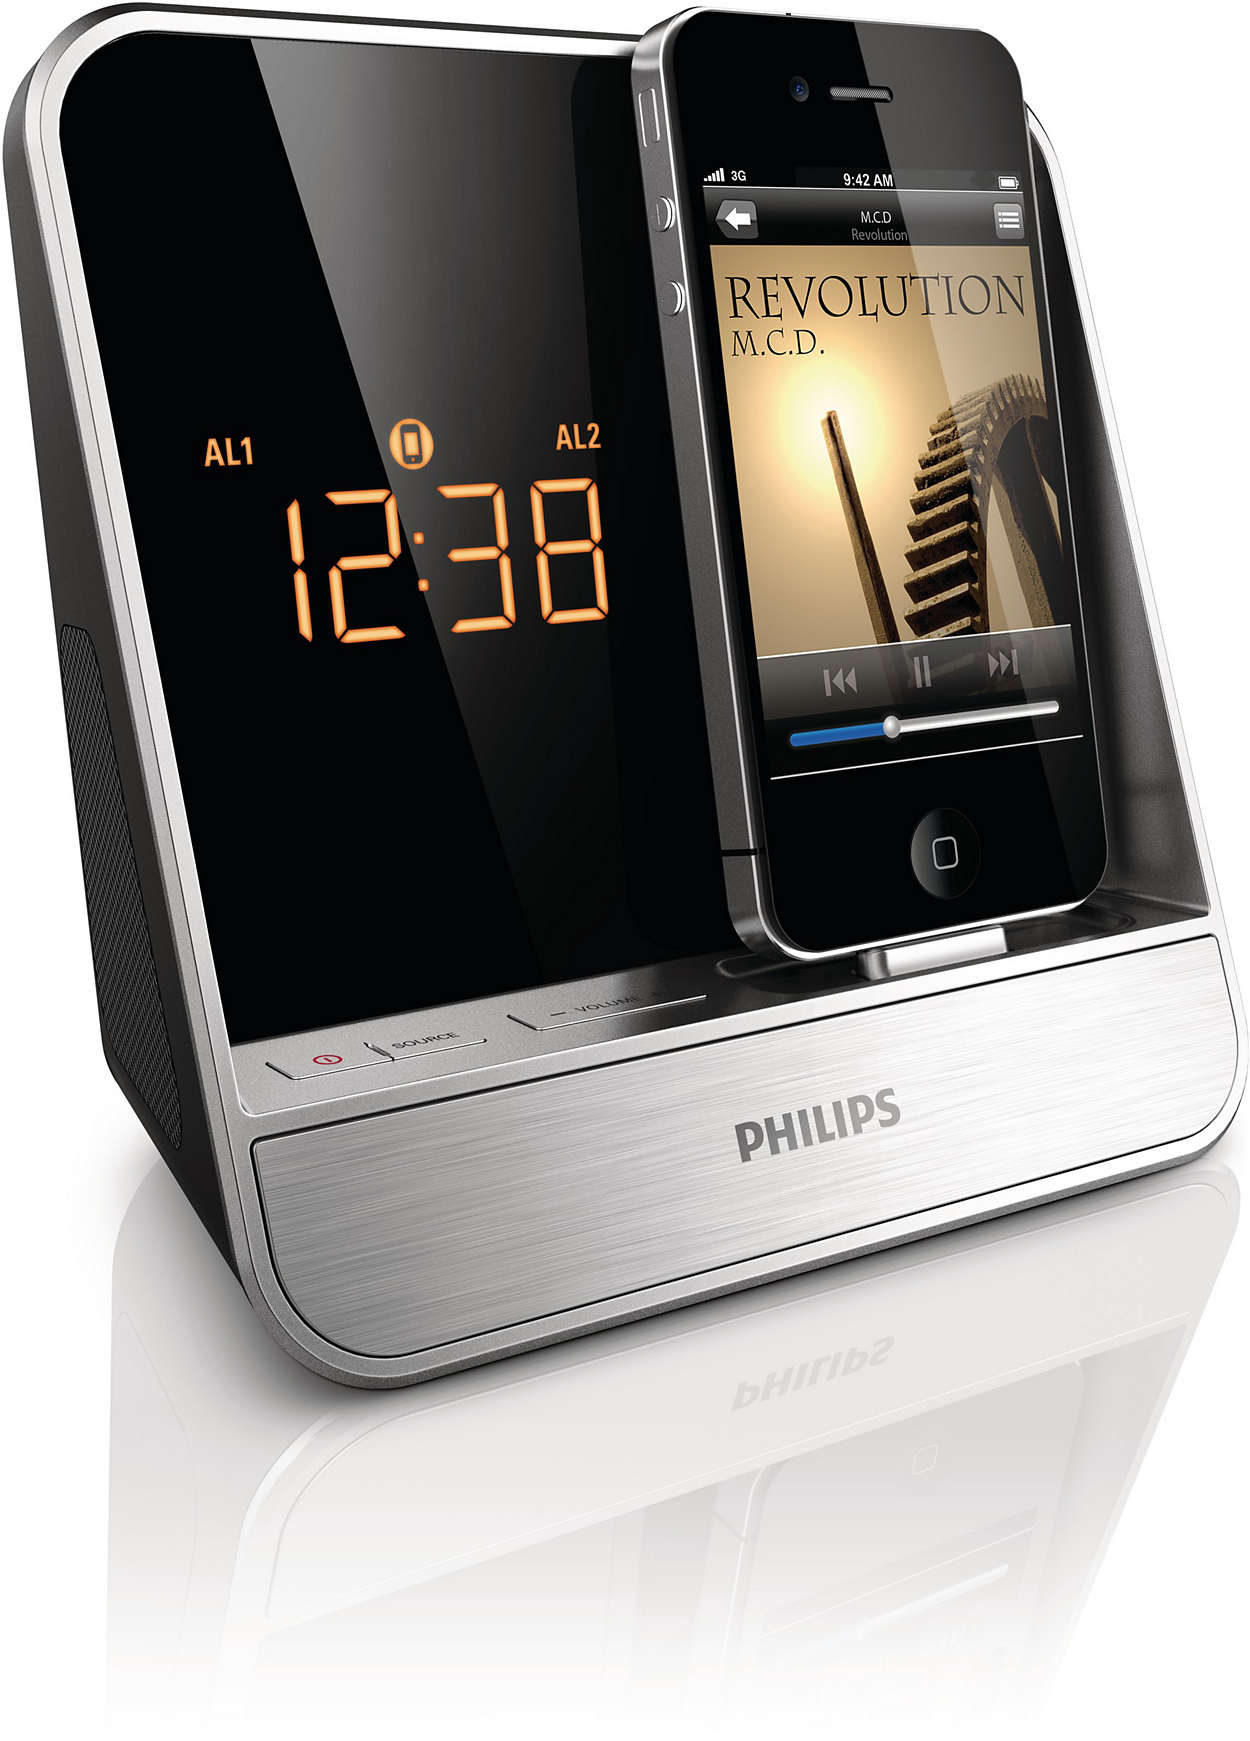 Pearly oprindelse Tarmfunktion Alarm Clock radio for iPod/iPhone AJ5300D/37 | Philips